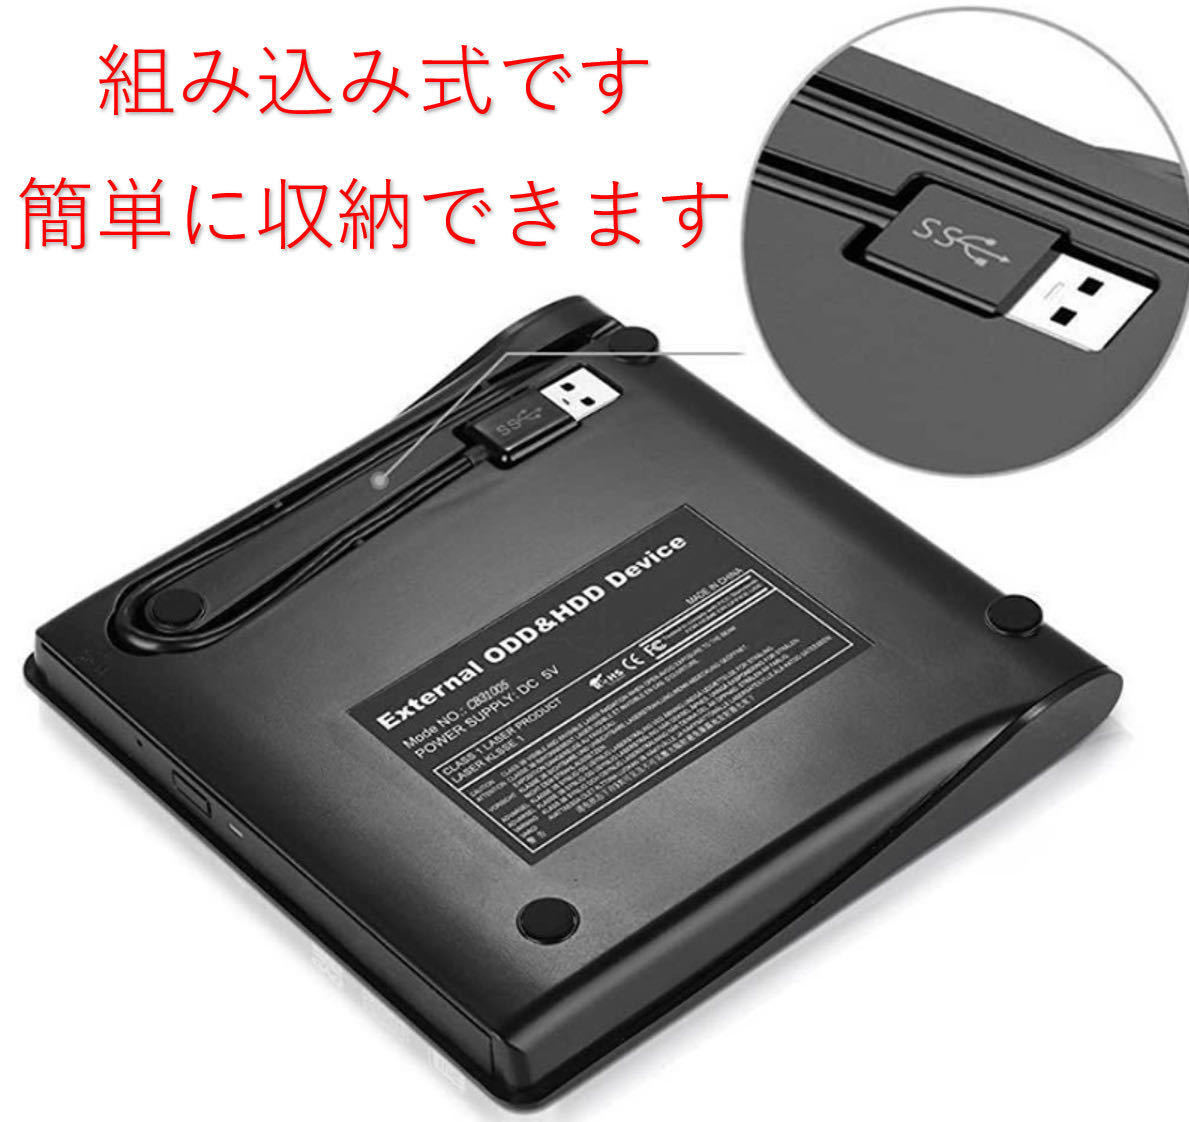 CD DVDドライブ 外付け USB3.0 CD/DVD読取・書込 USB3.0ポータブルドライブ Window/Mac OS両対応 高速 静音 簡単操作 DVD±RW CD-RW_画像4